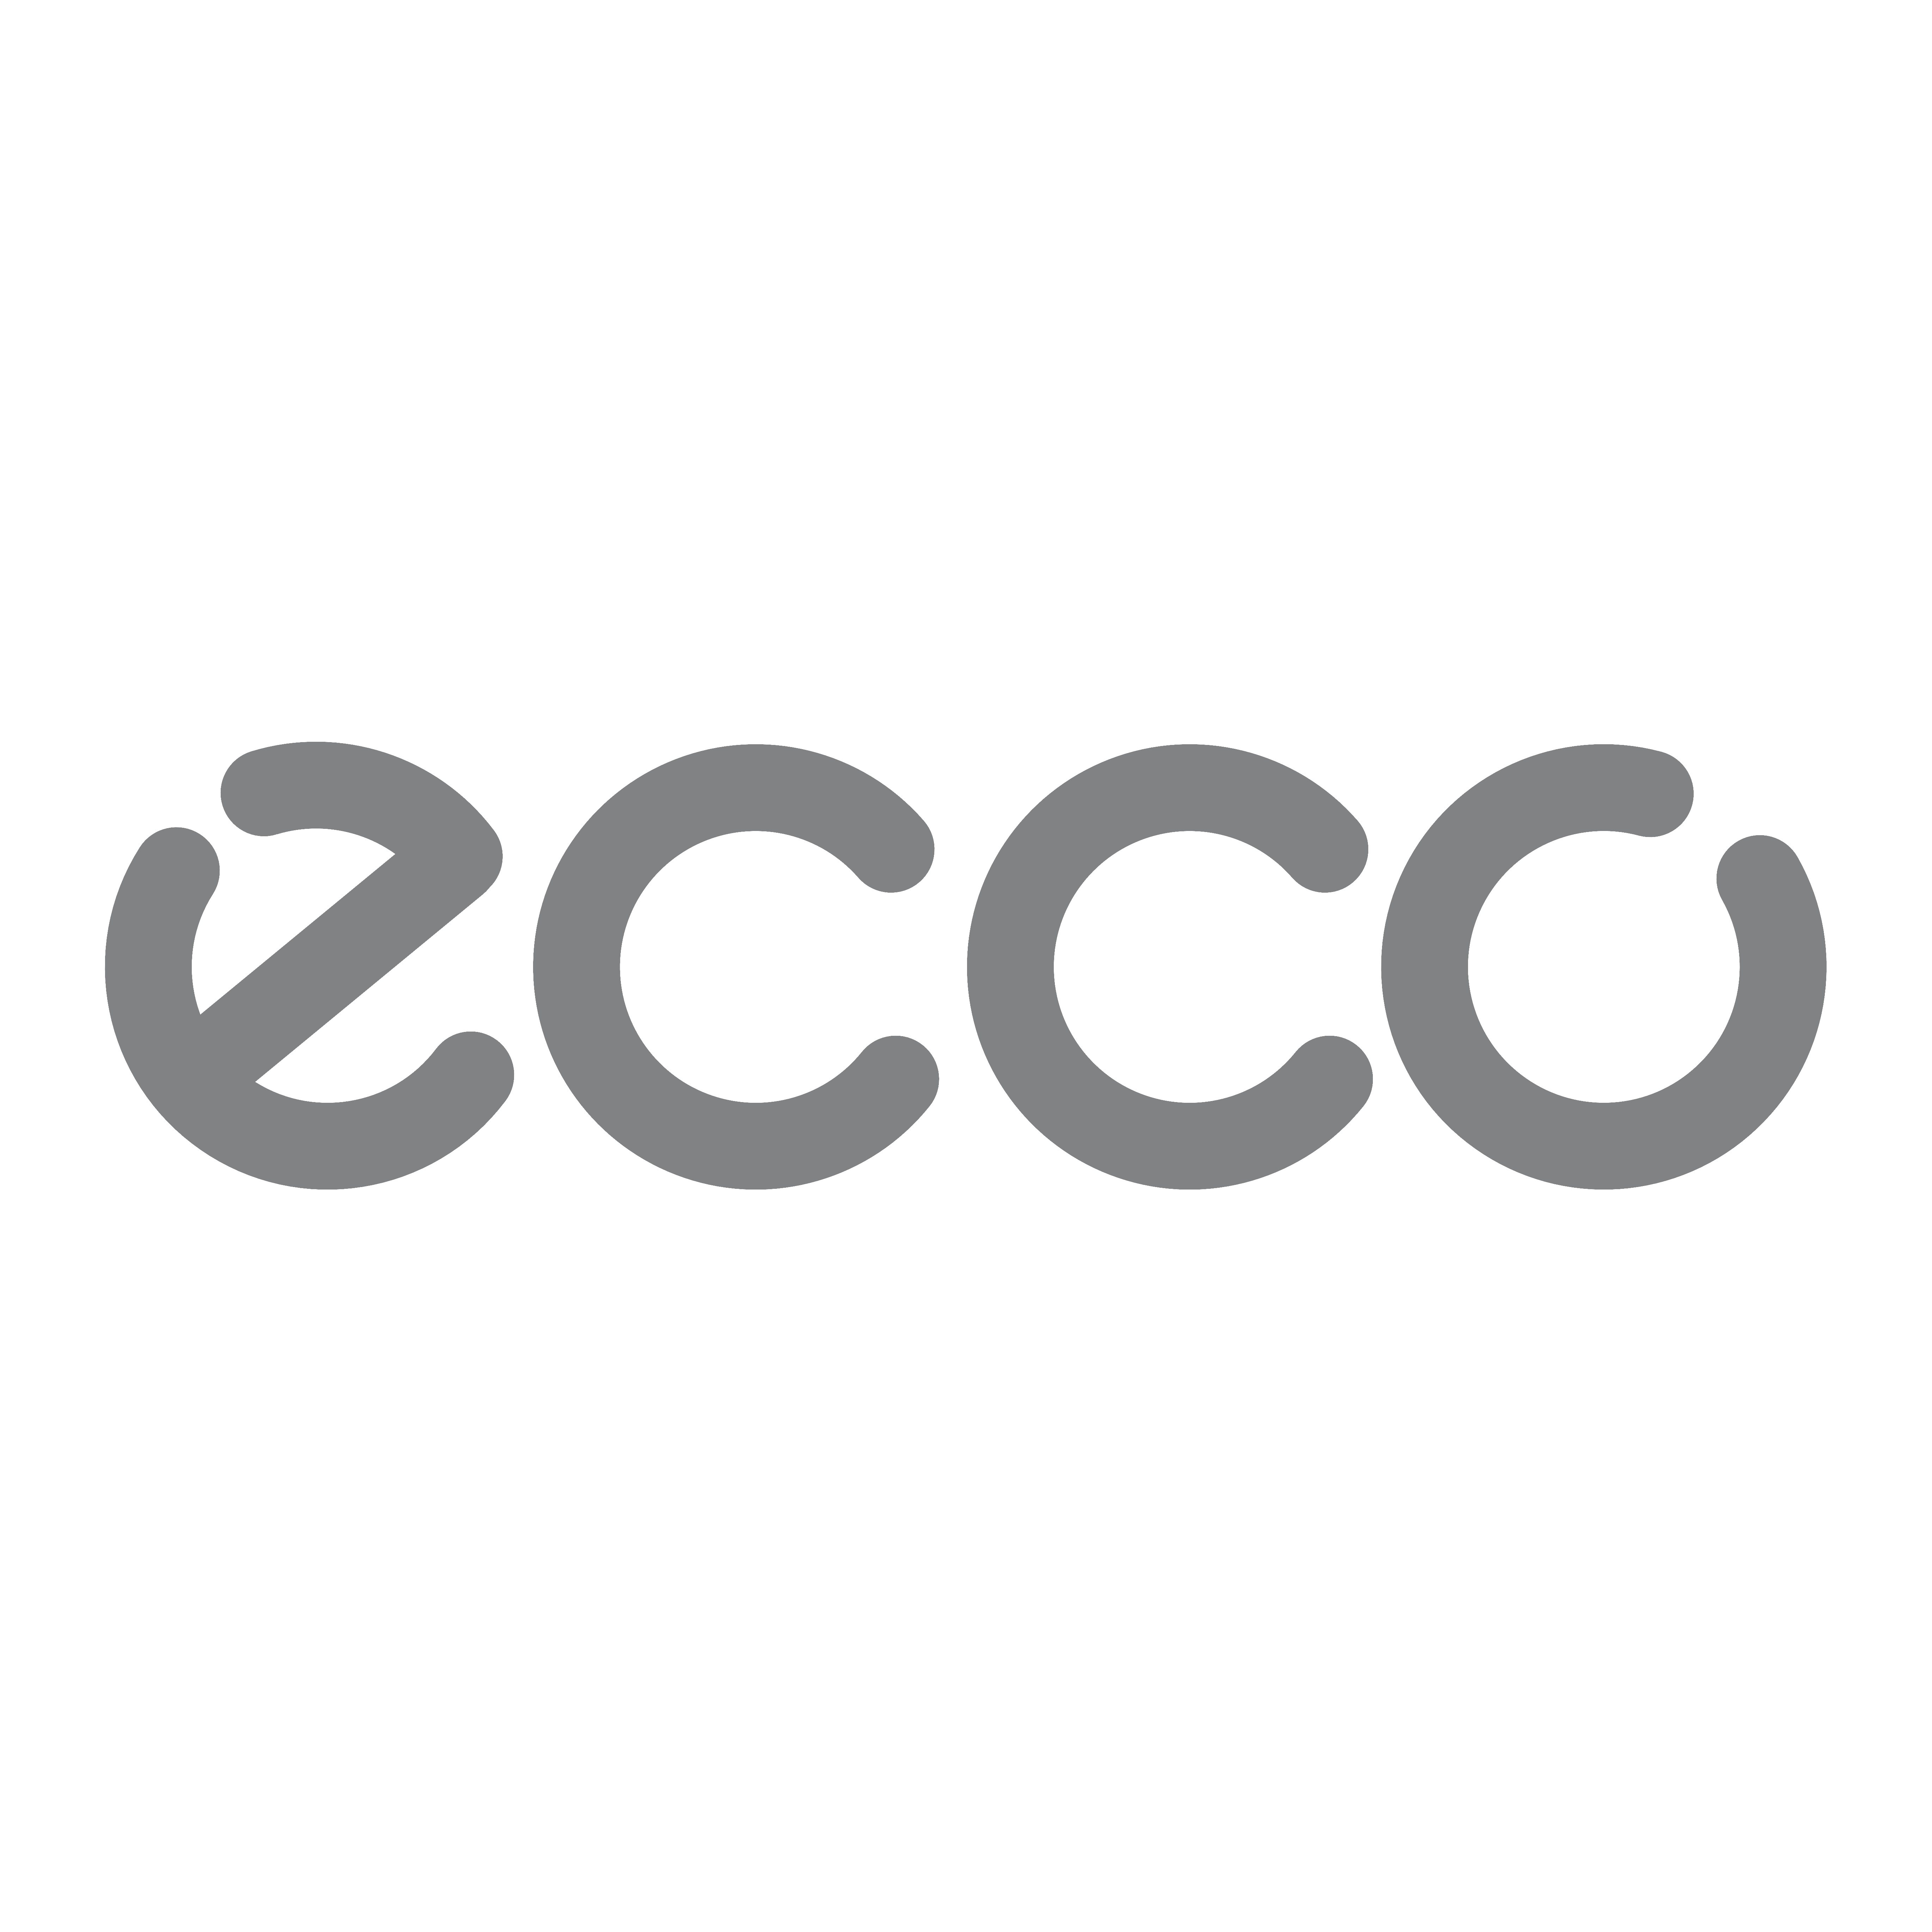 ECCO rabat & fri fragt - jan 2022 - Rabble